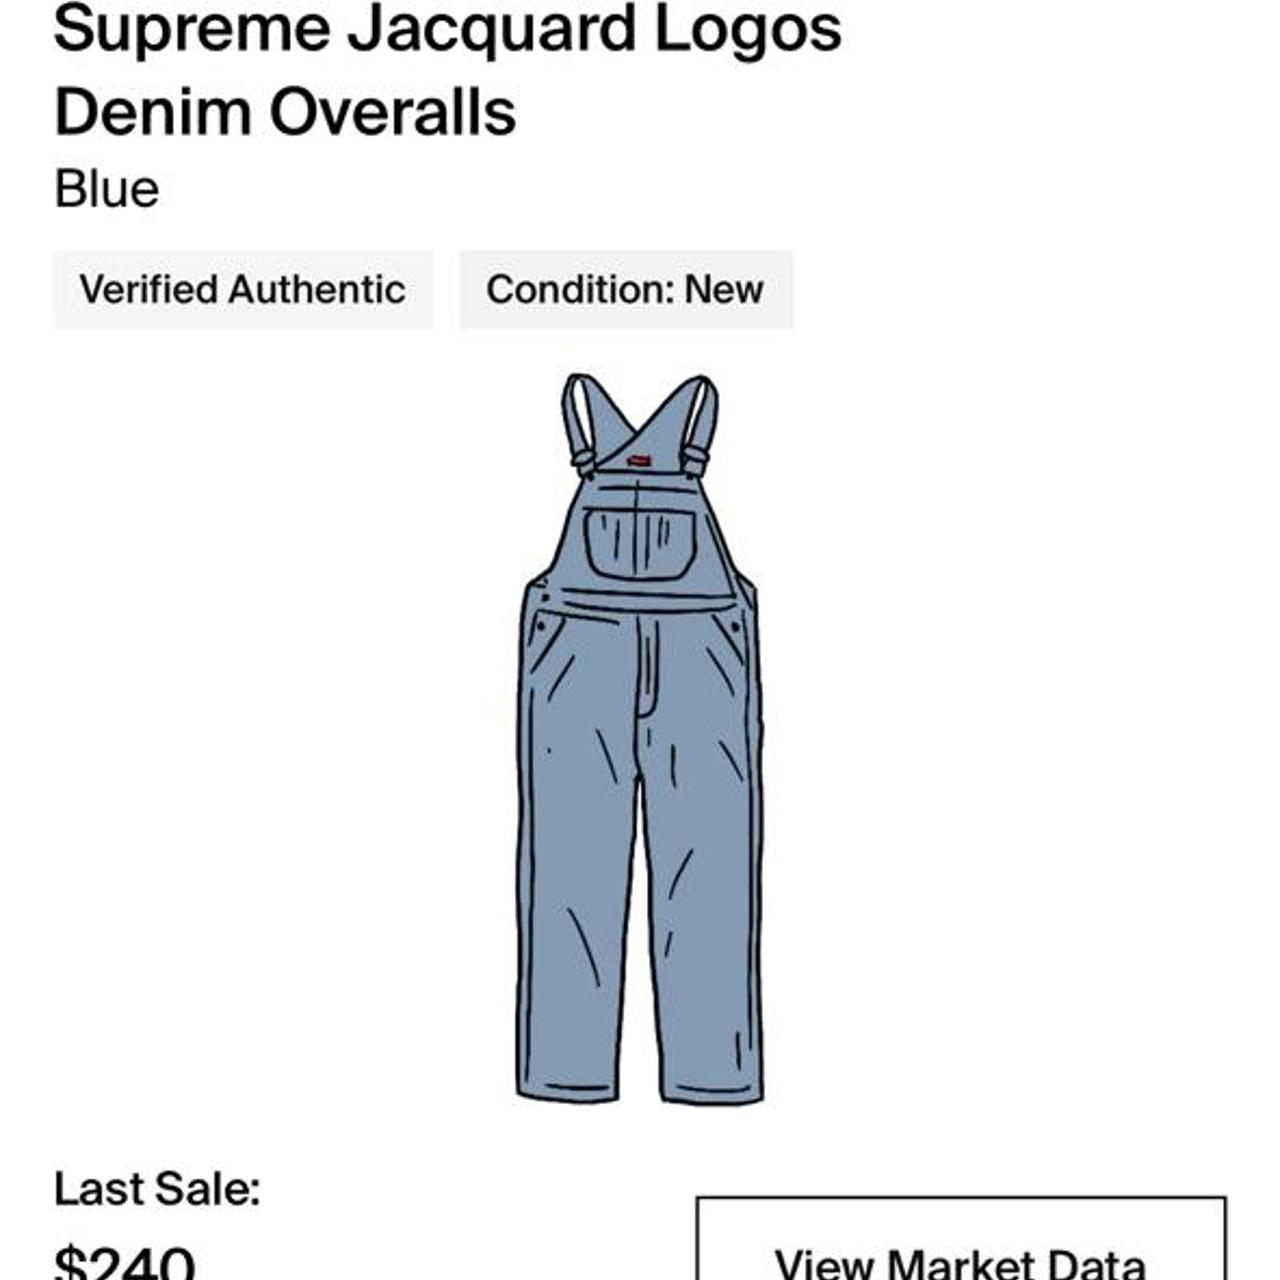 Supreme Jacquard Logos Denim Overalls